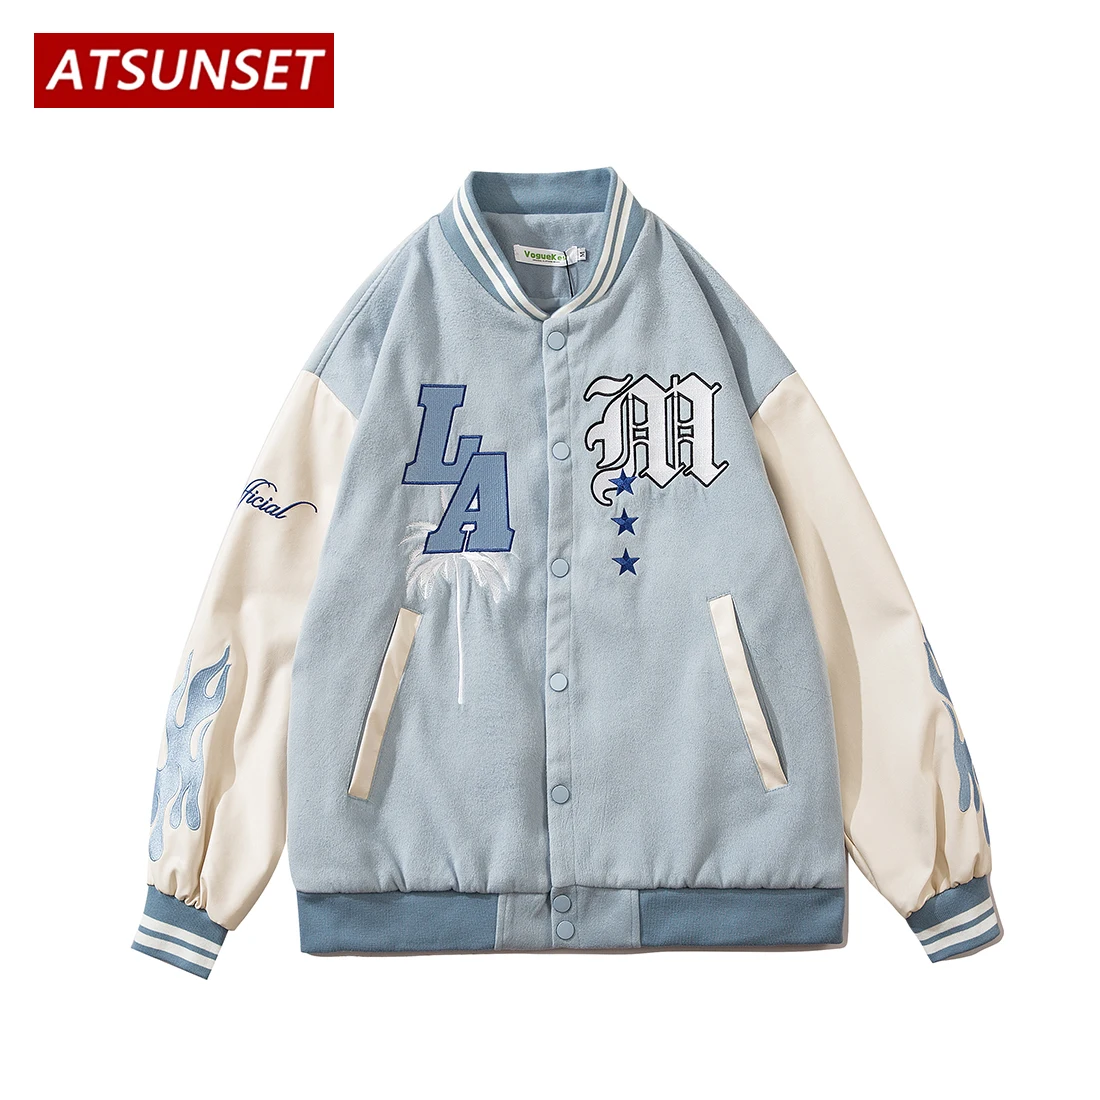 ATSUNSET Big Letter L.A Element Hip Hop Baseball Jacket Harajuku Retro Varsity Jacket Fashion Streetwear Cotton Jacket Coat